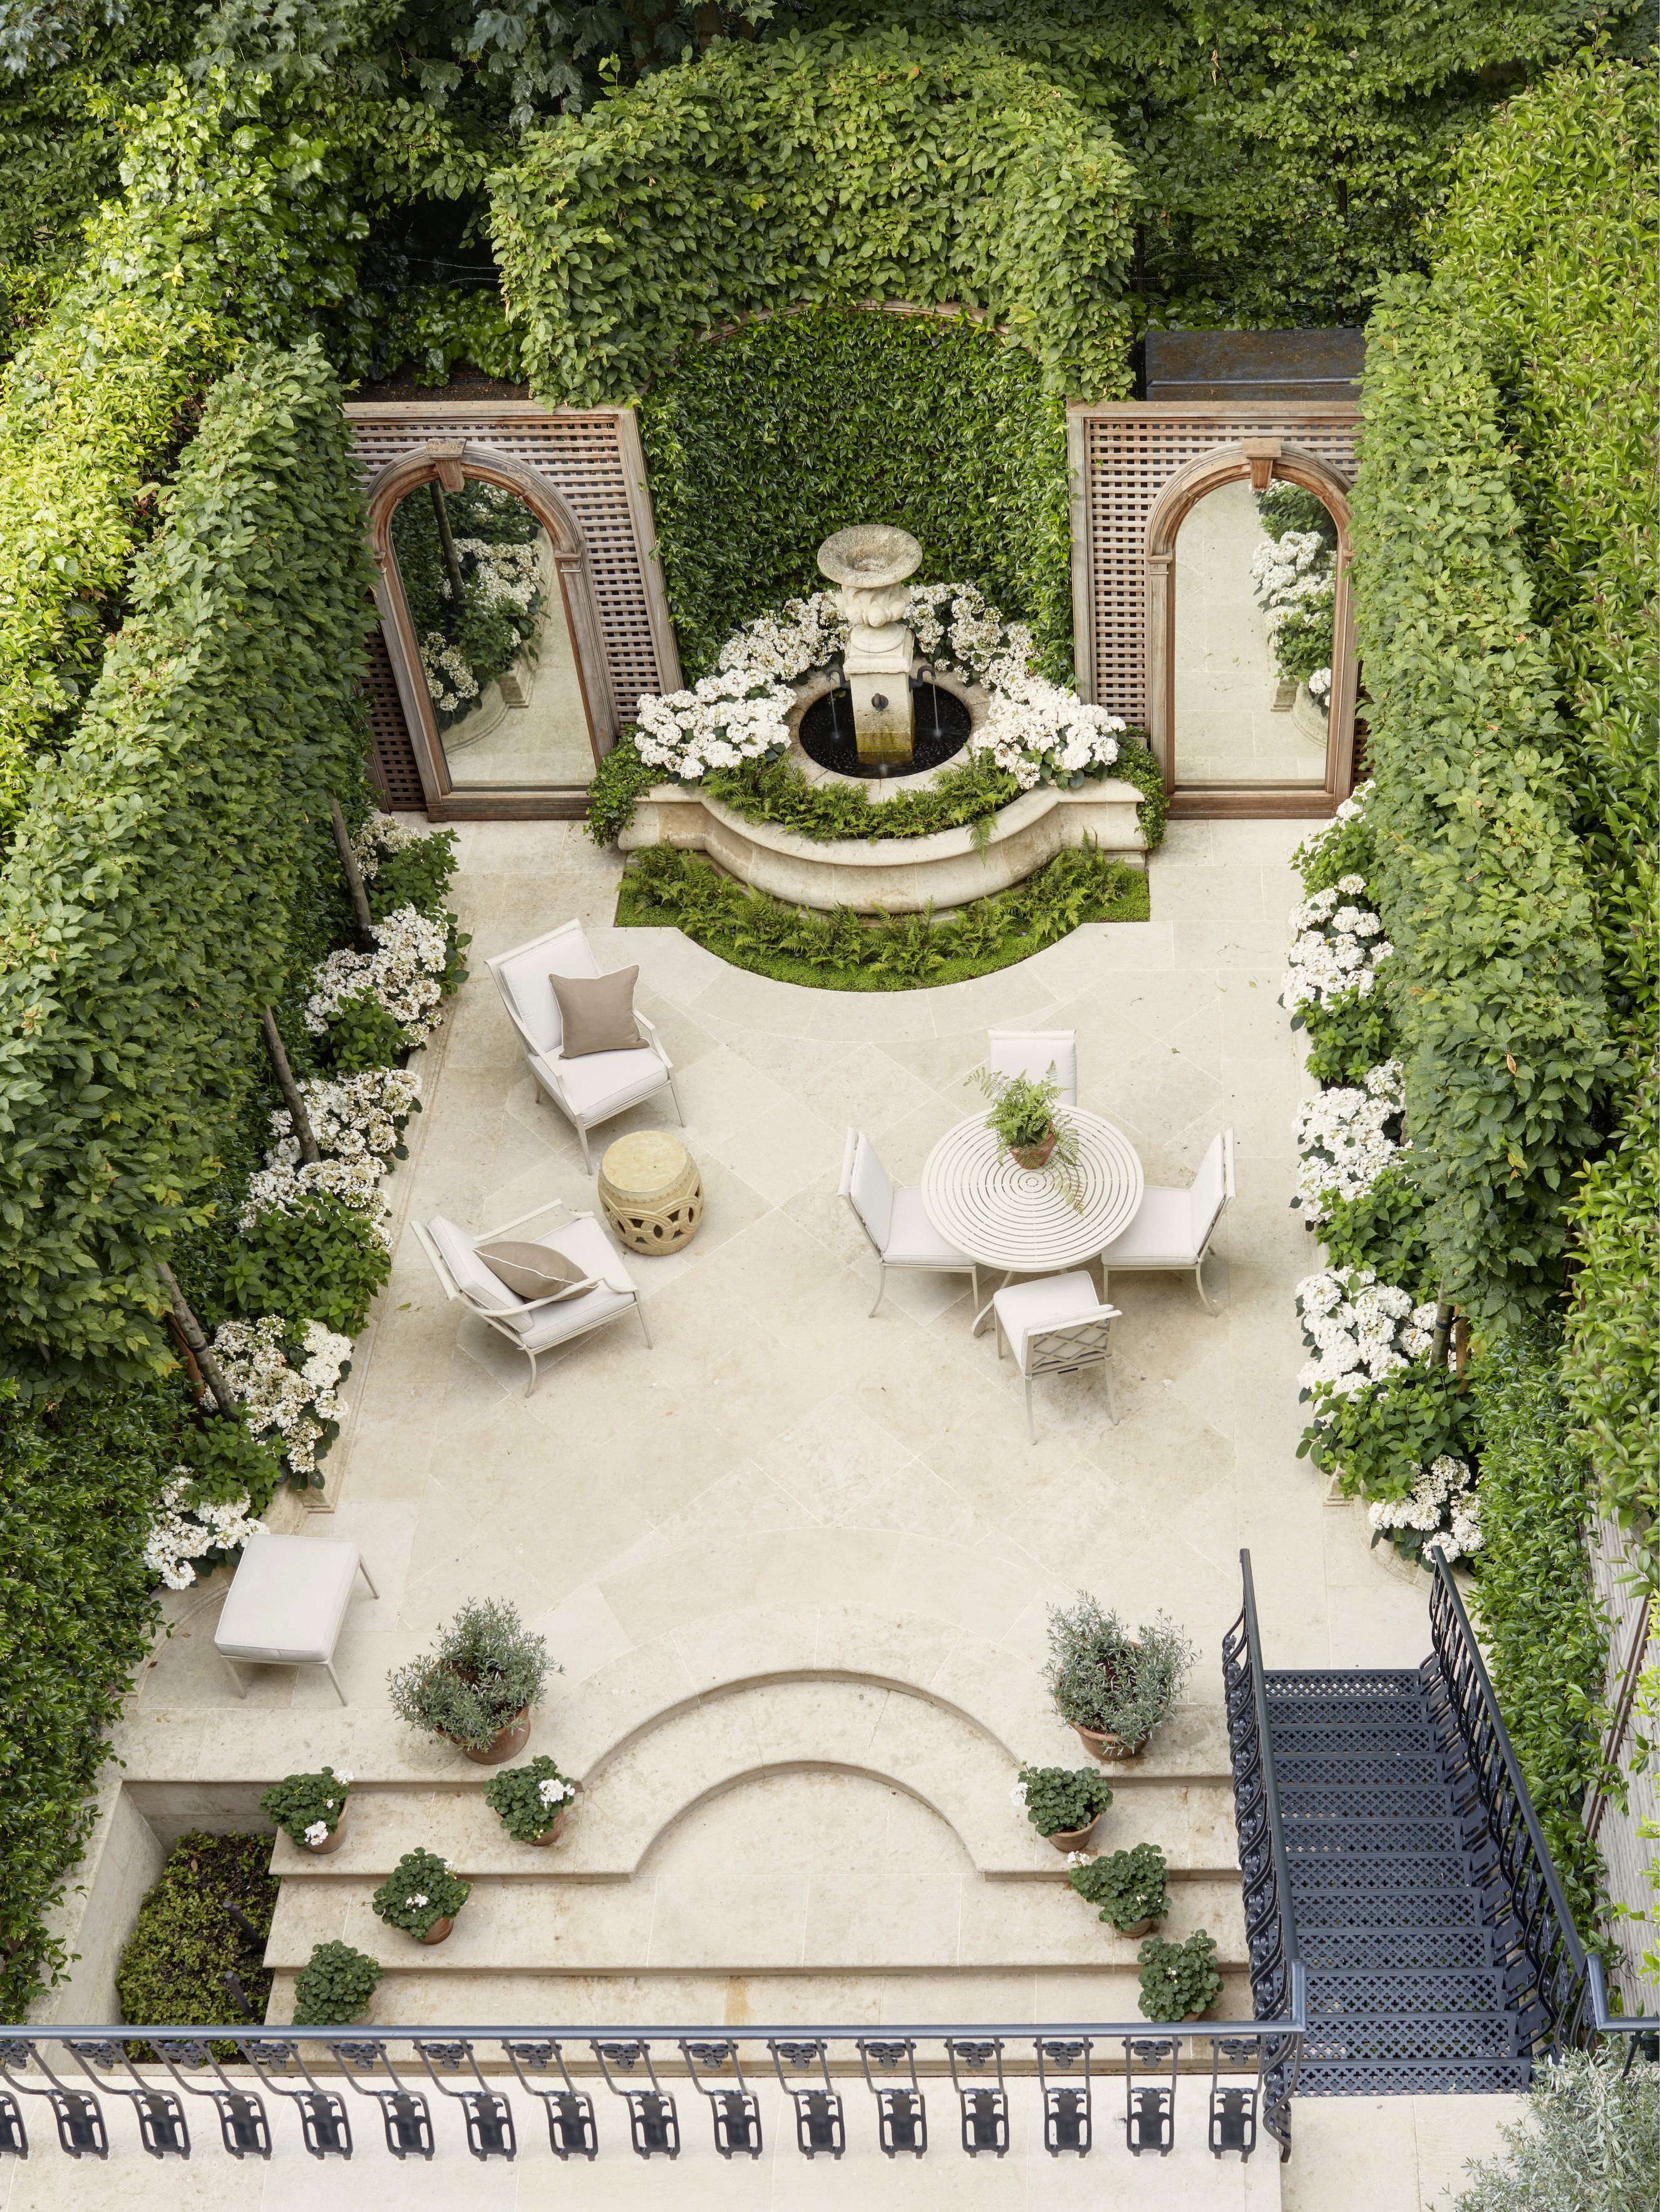 22 Best French-Style Gardens 2021 - Beautiful French Garden Design